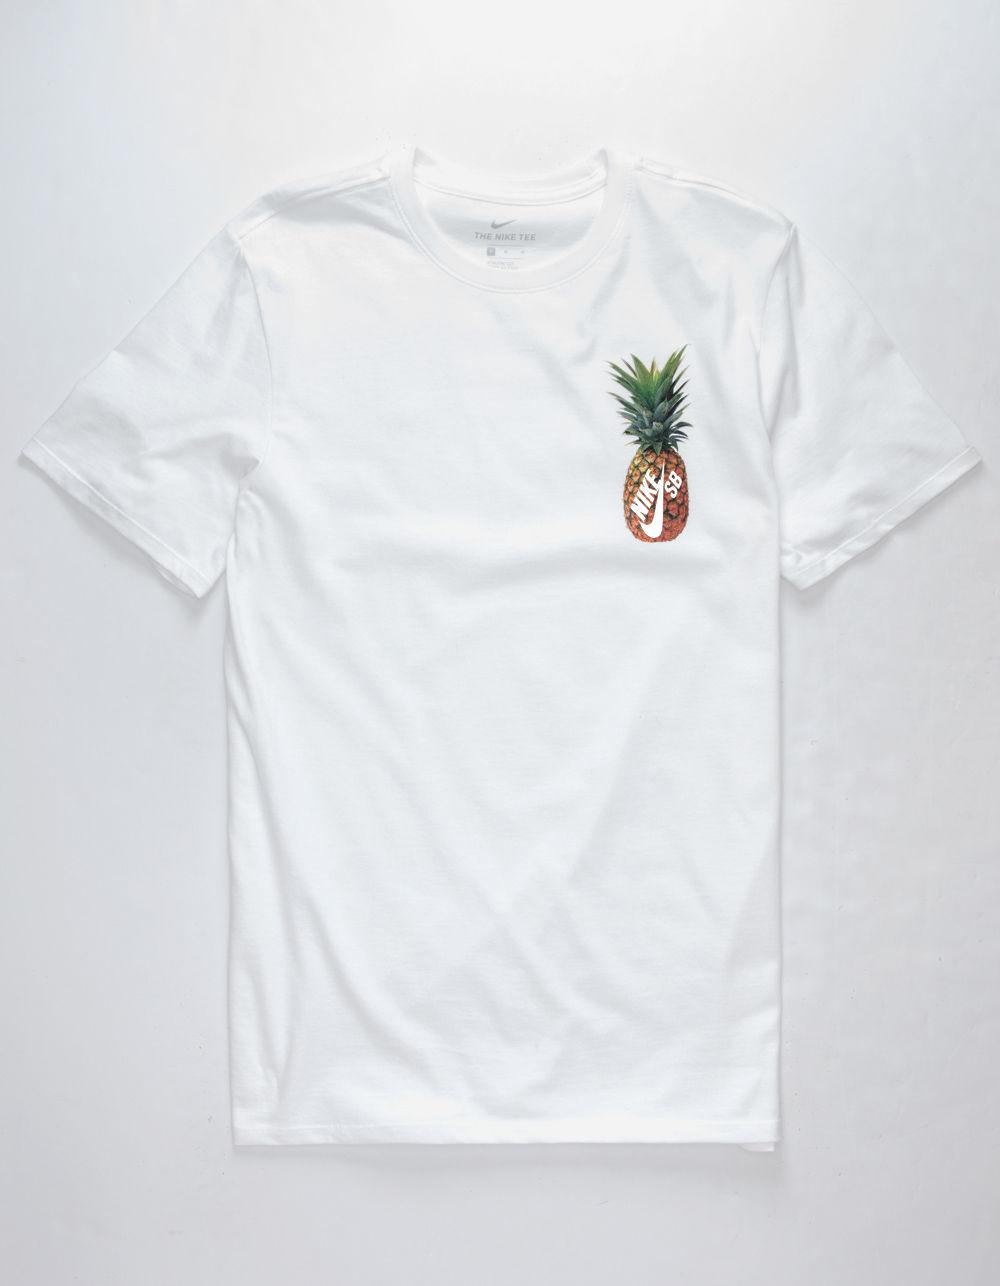 nike pineapple shirt